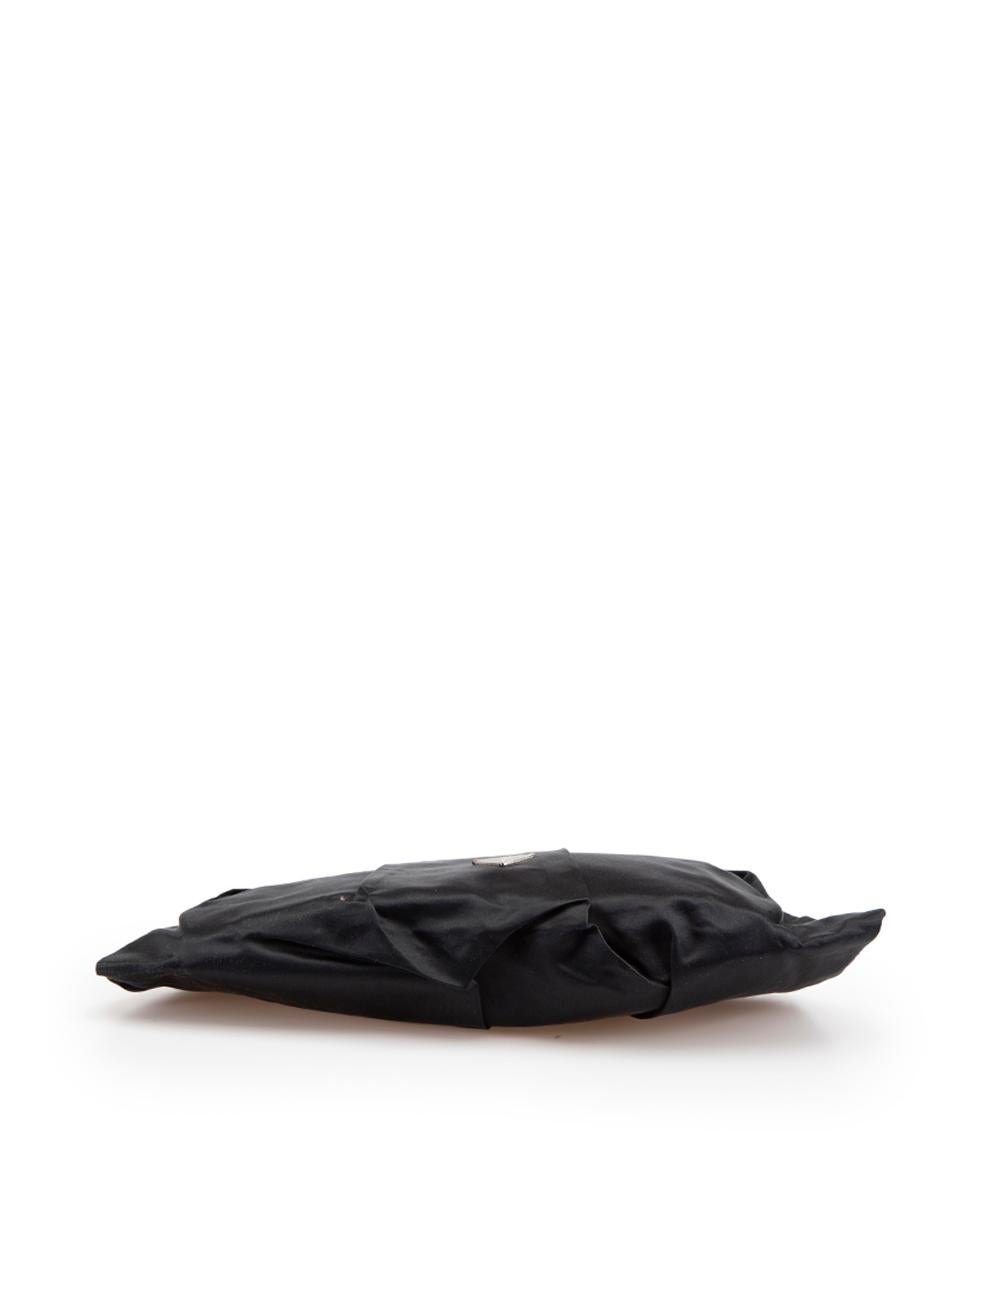 Prada Women's Black Tessuto Pleated Clutch Bag 1